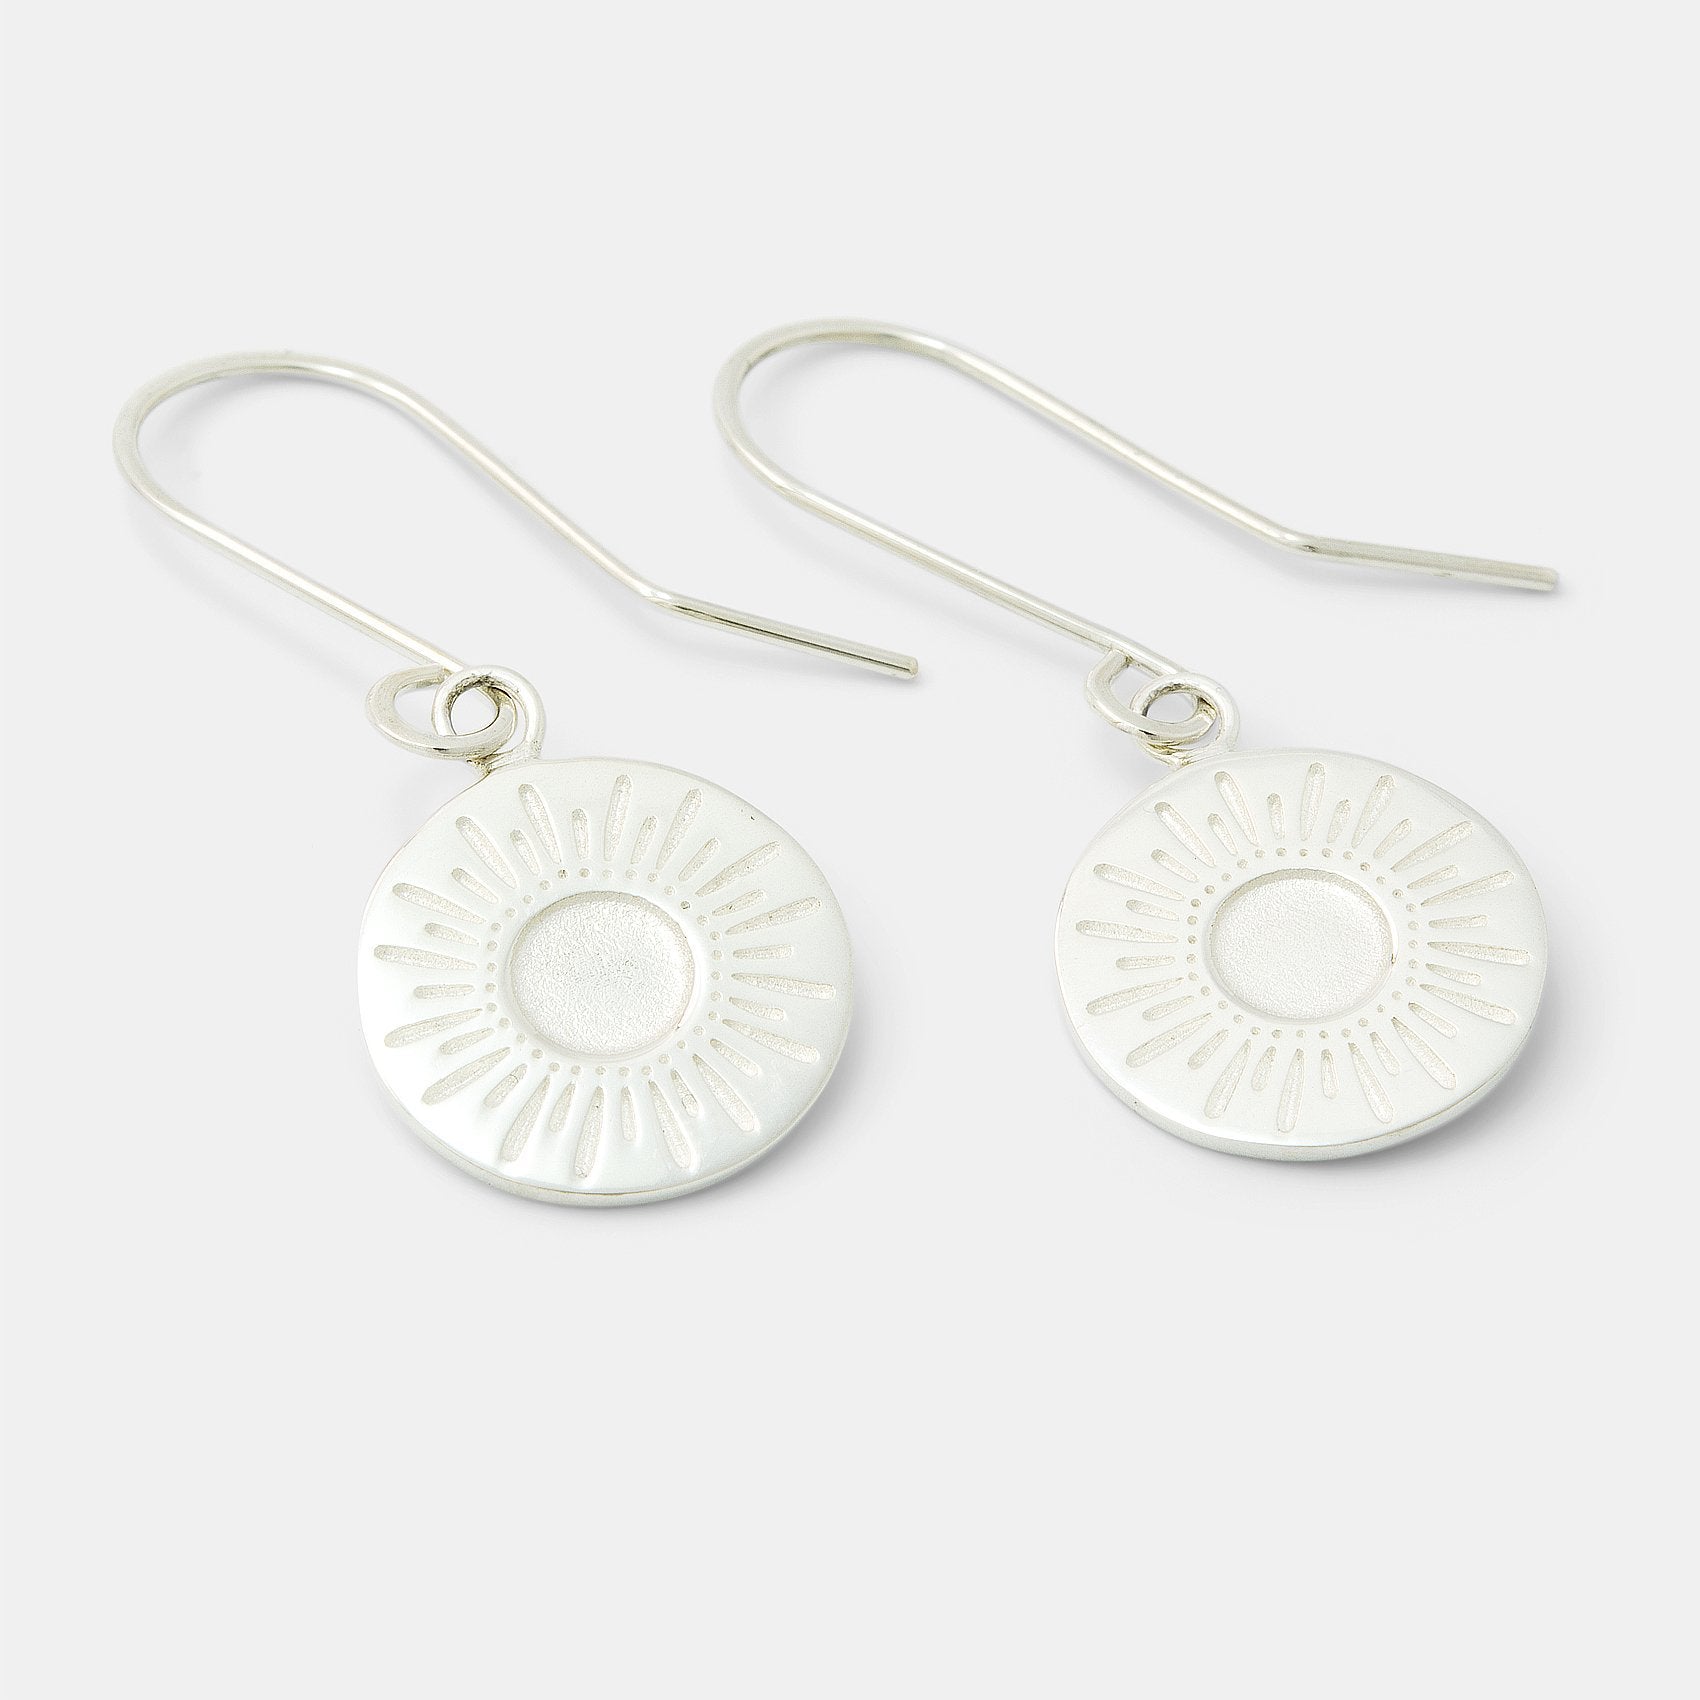 Sunburst amulet earrings - Simone Walsh Jewellery Australia